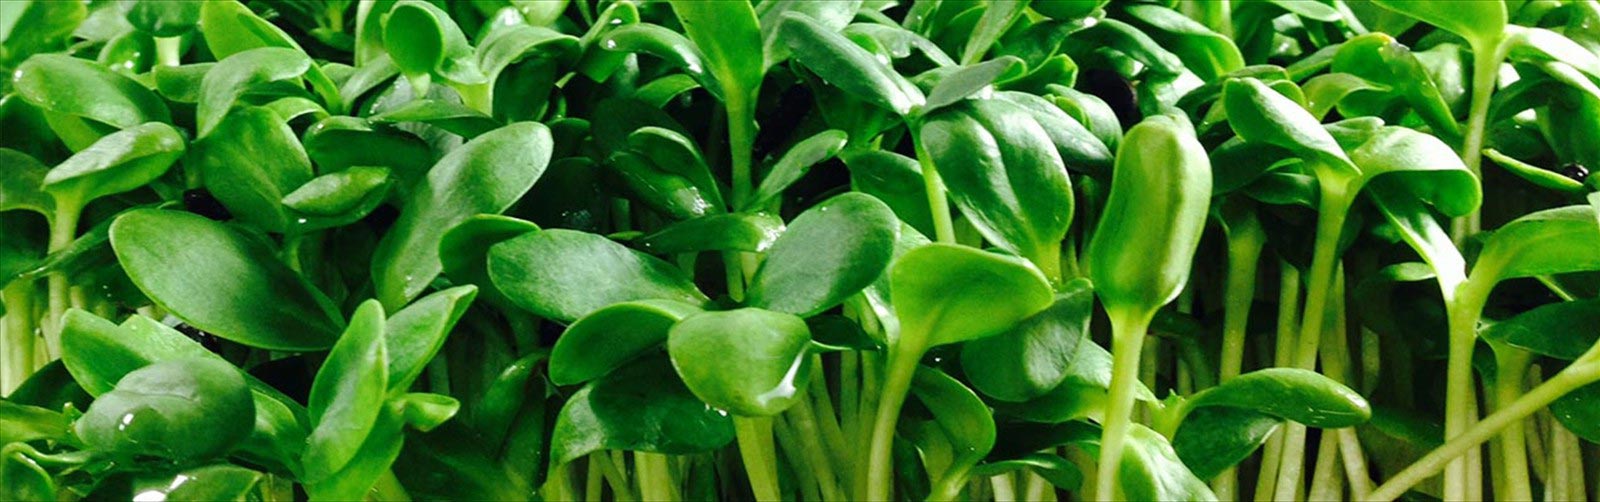 Sunflower microgreens| Organic farm fresh greens micro herbs custom mixes 